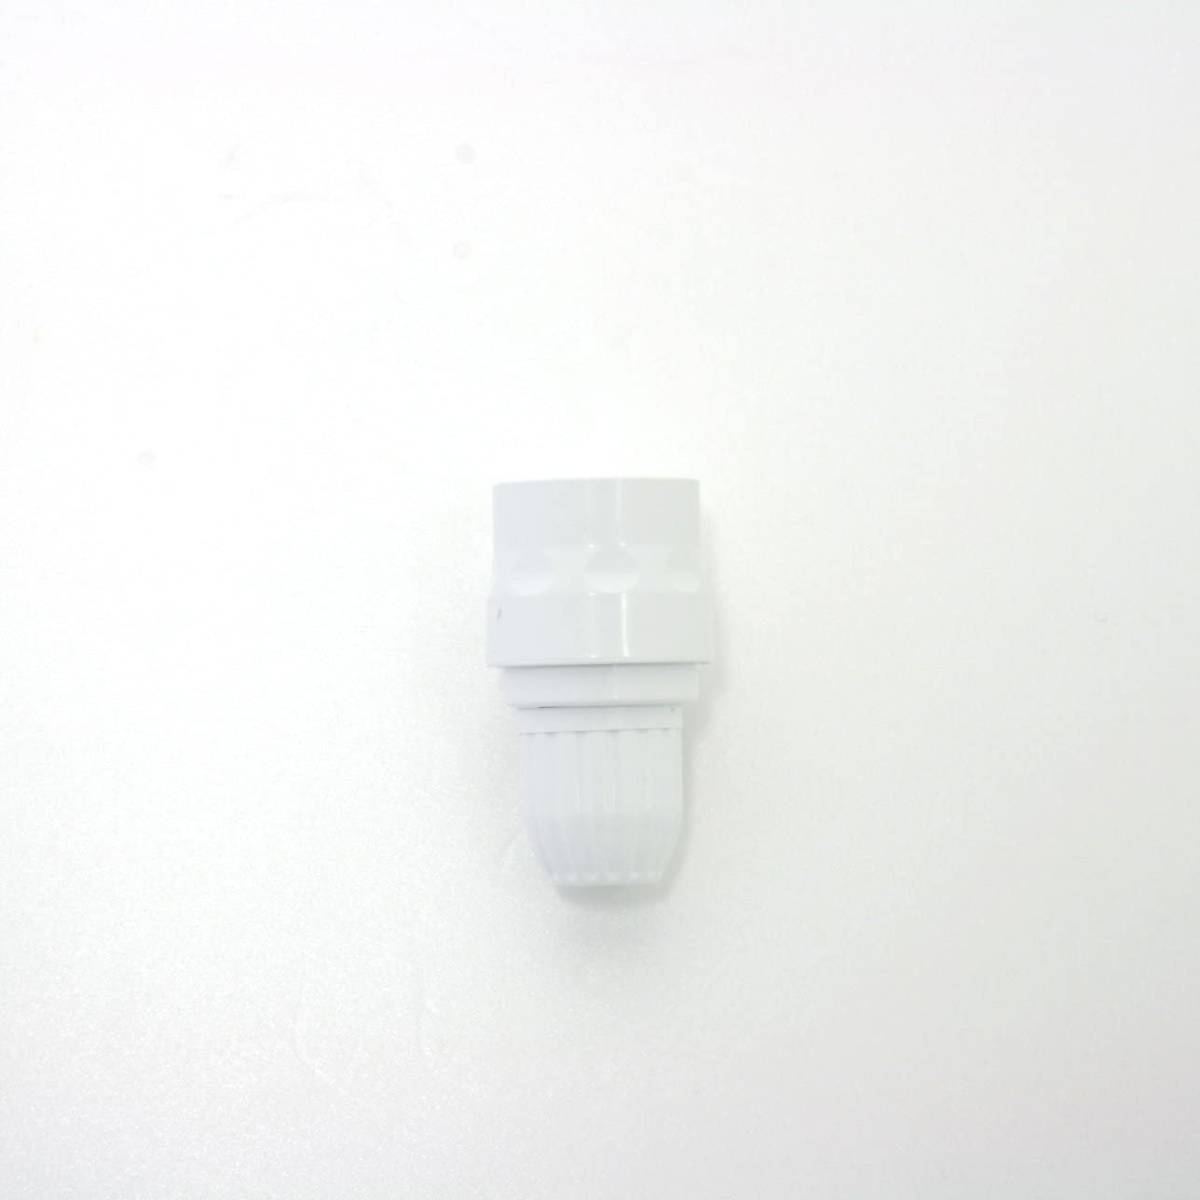  white single goods Takagi (takagi) hose joint slim connector small hose G079SH